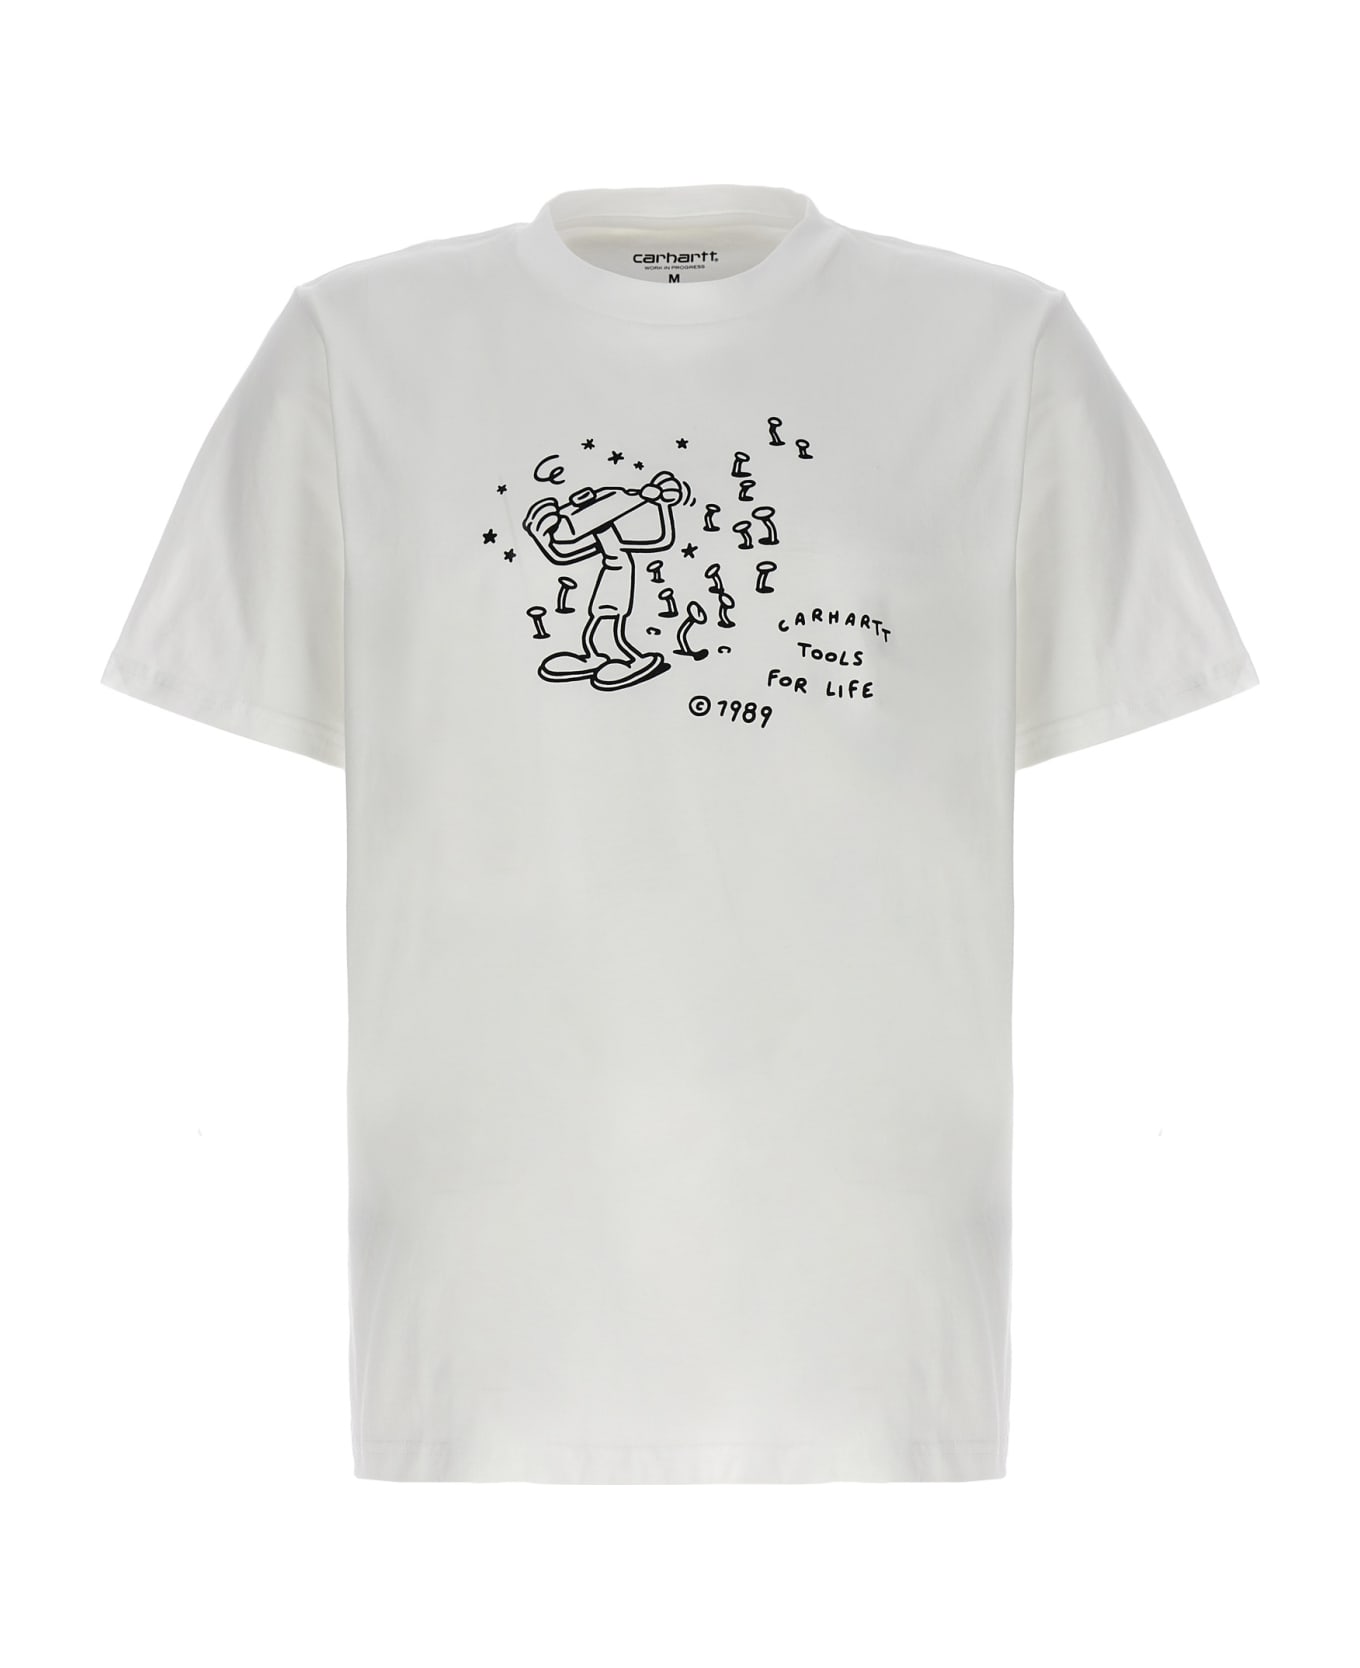 Carhartt 'tools For Life' T-shirt - White/Black